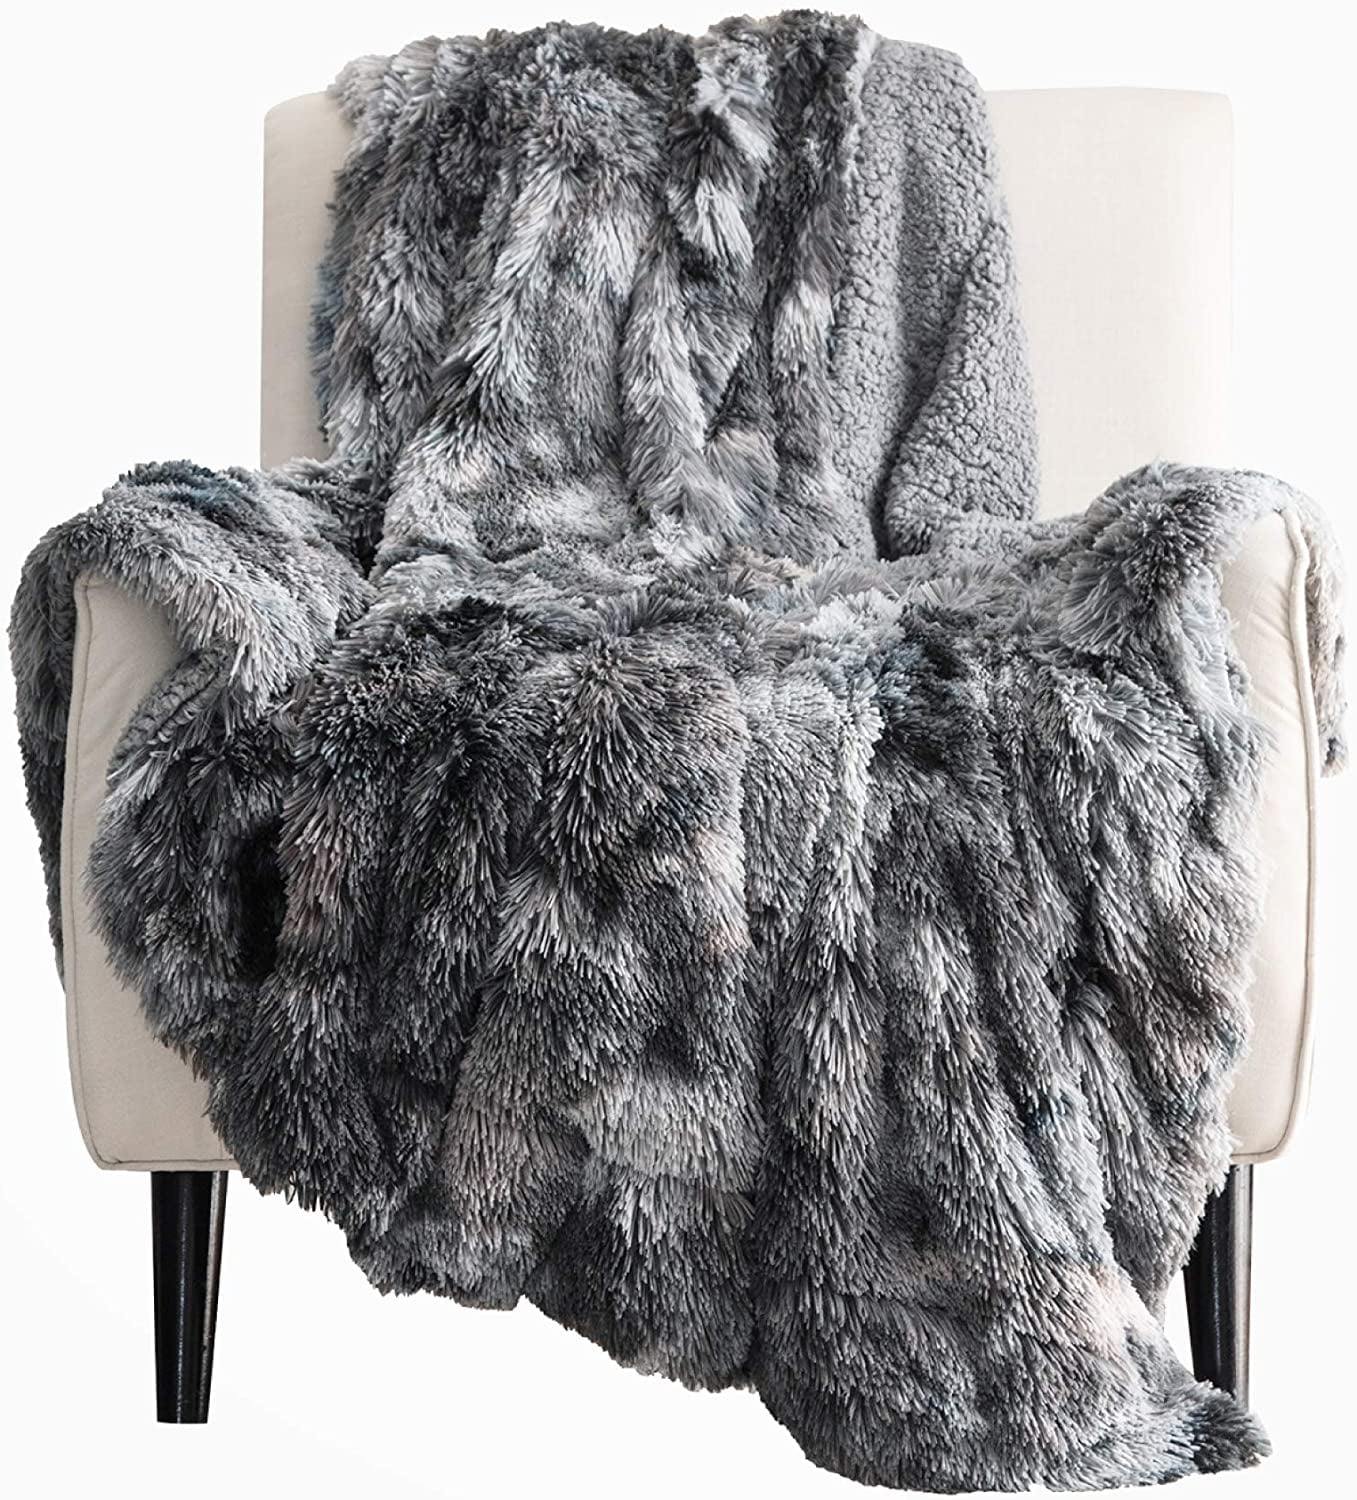 Plain Shaggy Chic Fur Blanket Leopard Print Throw Sofa Bed Soft Warm Cover Furry